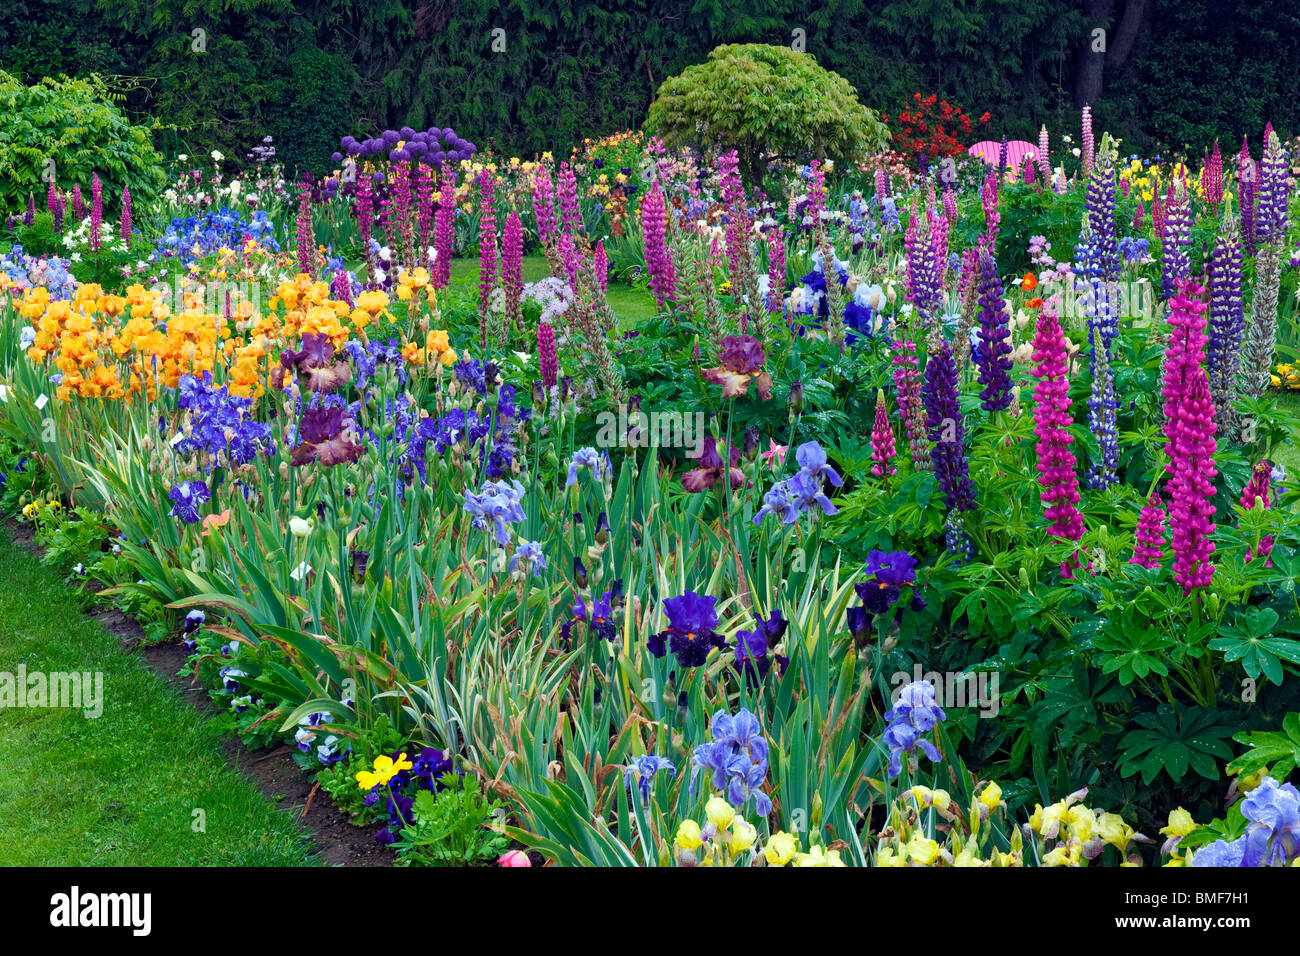 Many varieties of lupine and irises bloom at Schreiner's Iris Display Garden in Oregon's Marion County. Stock Photo